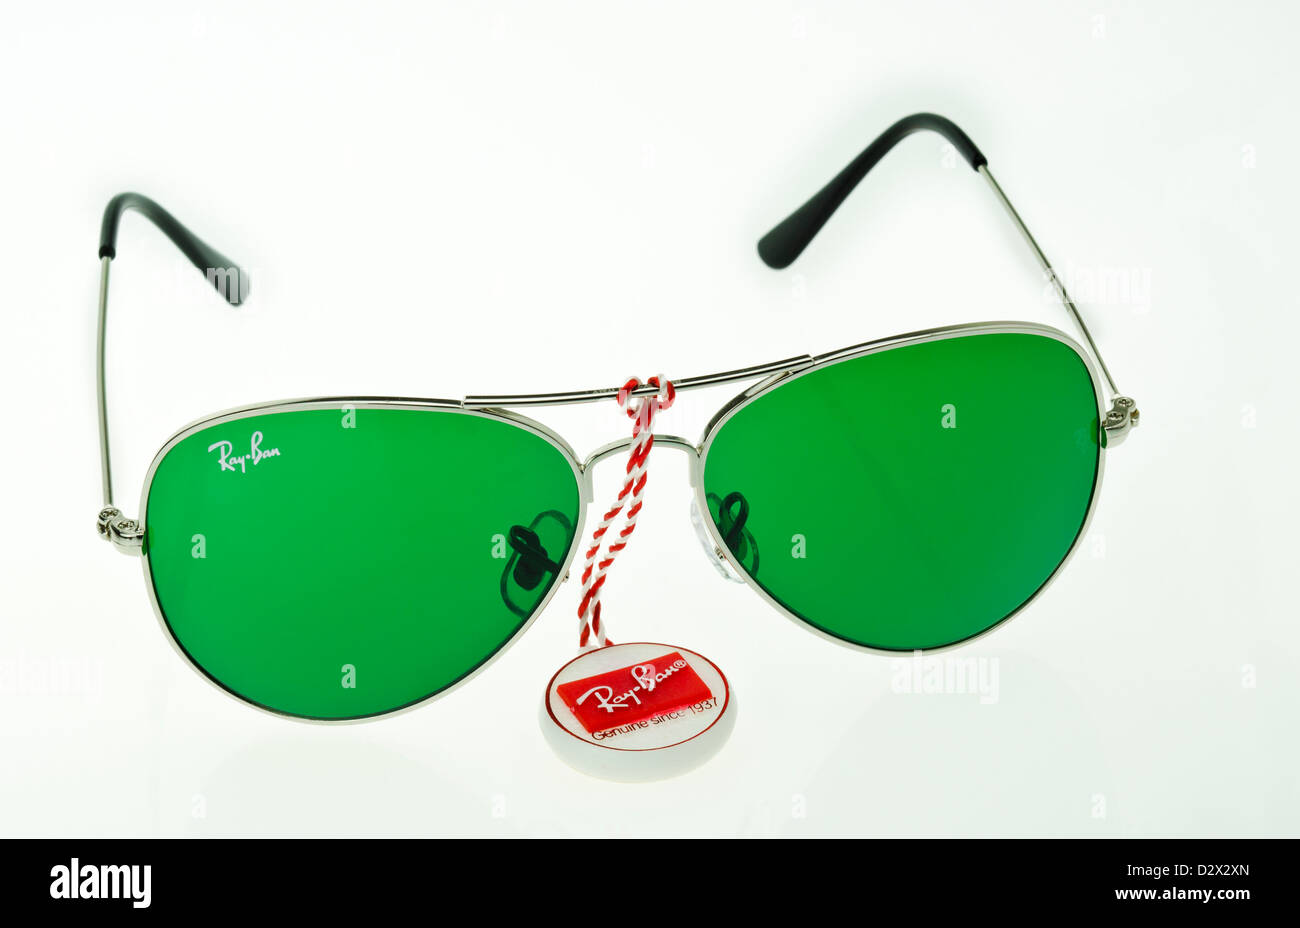 Fake Ray Ban Sunglasses from China Stock Photo - Alamy